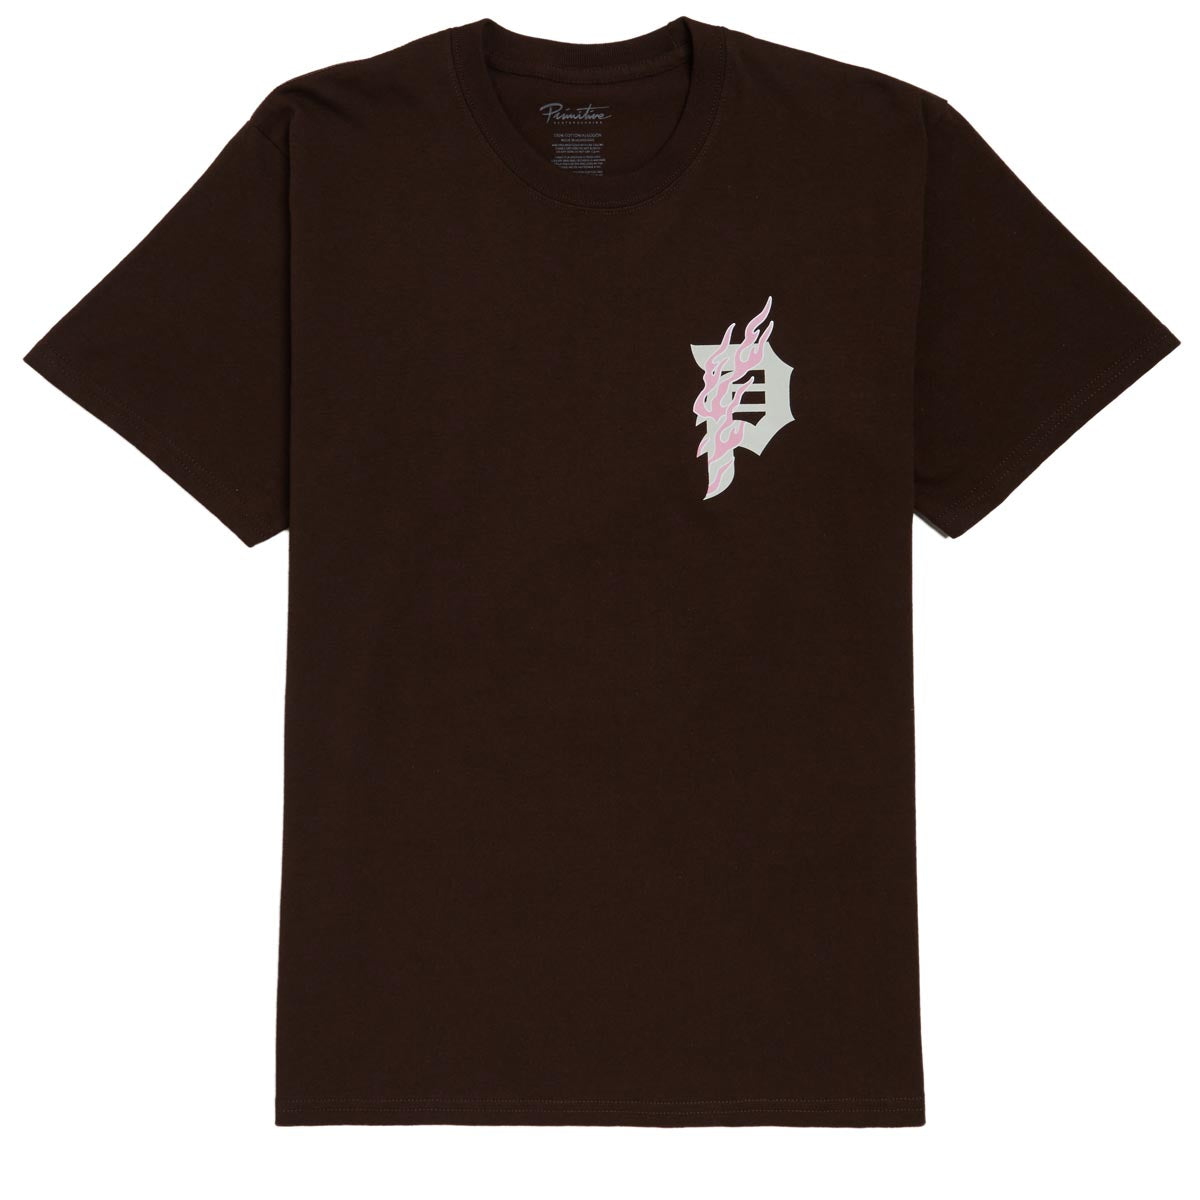 Primitive Honor T-Shirt - Brown image 2